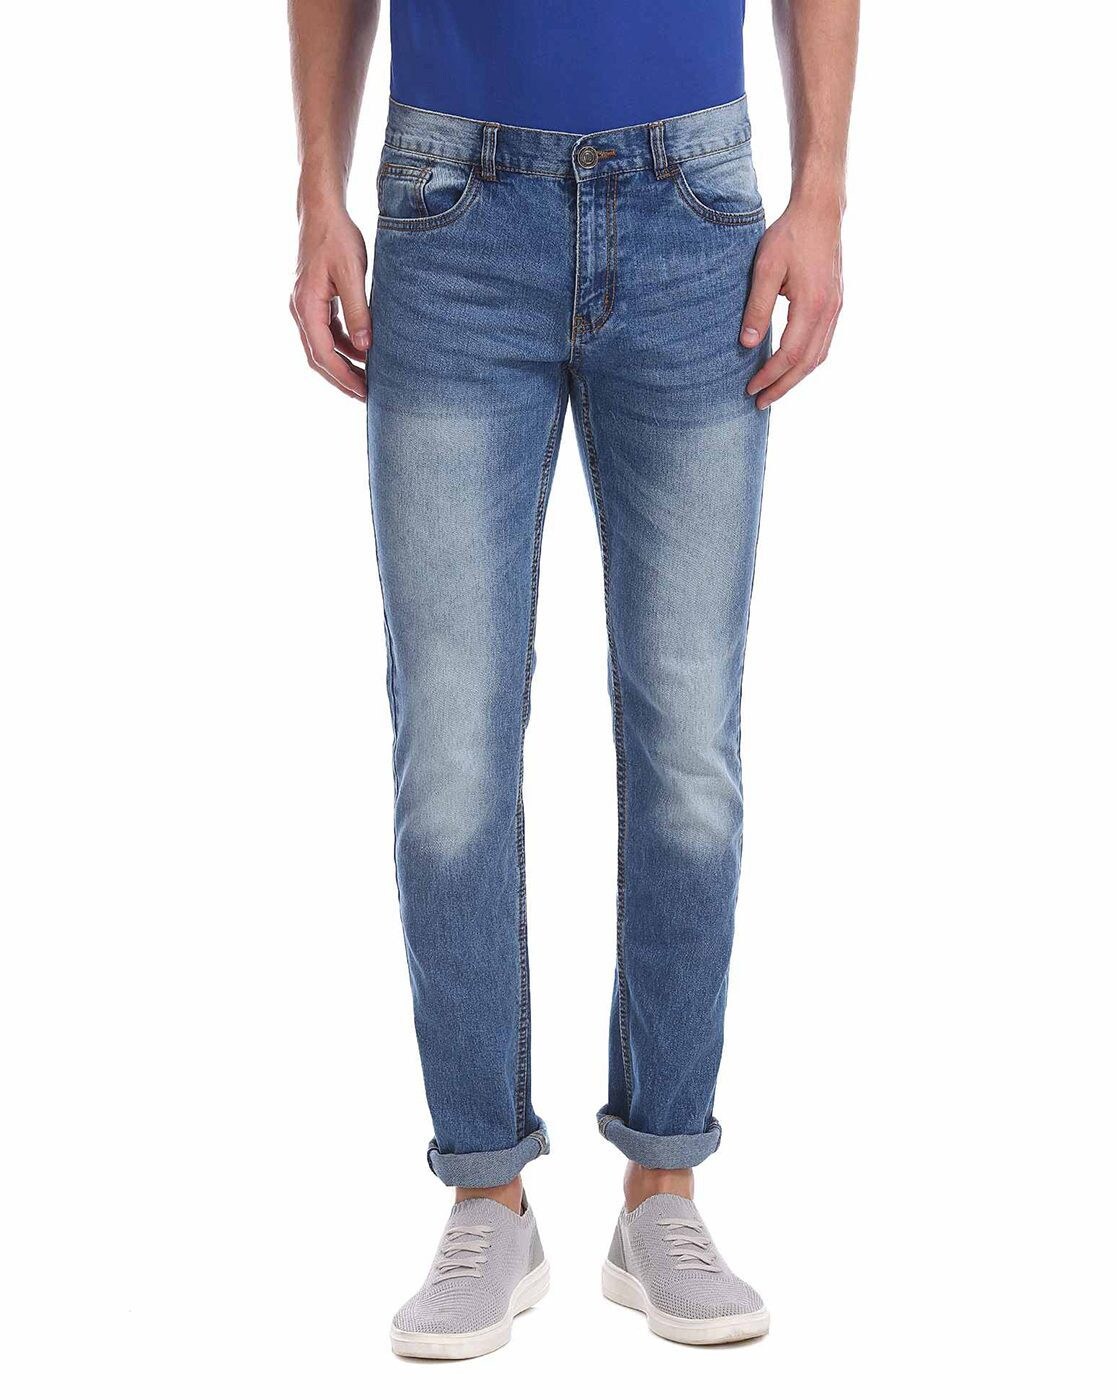 newport jeans price